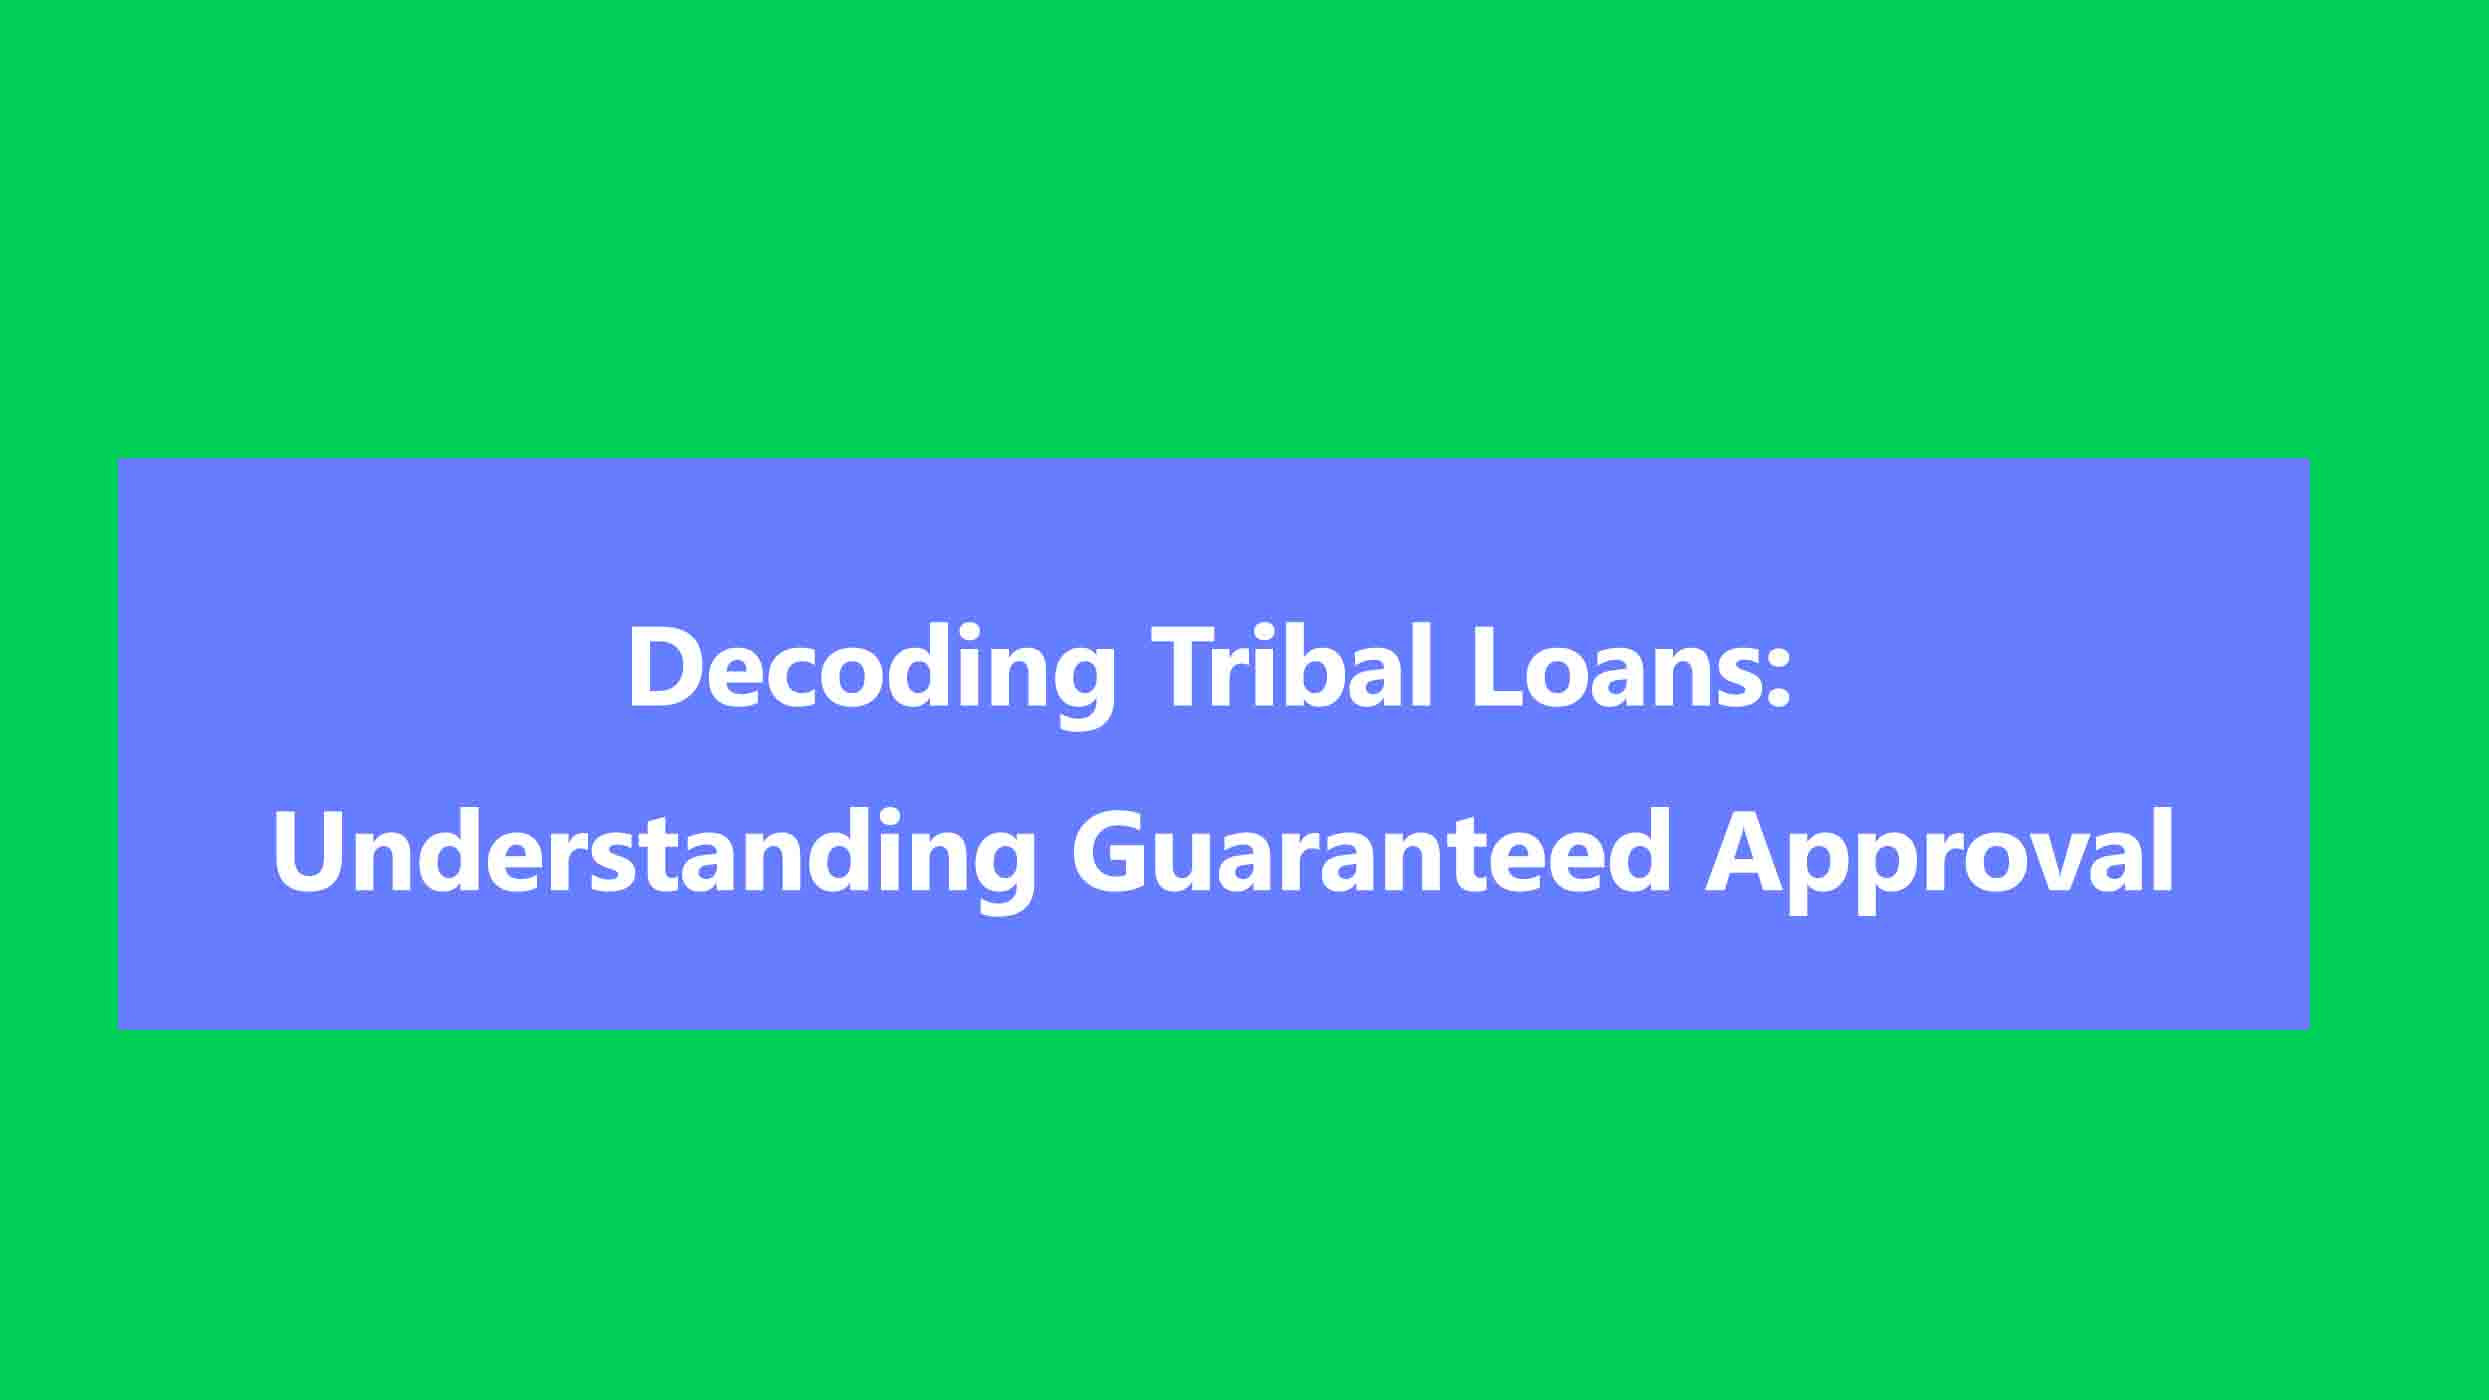 Decoding Tribal Loans: Understanding Guaranteed Approval